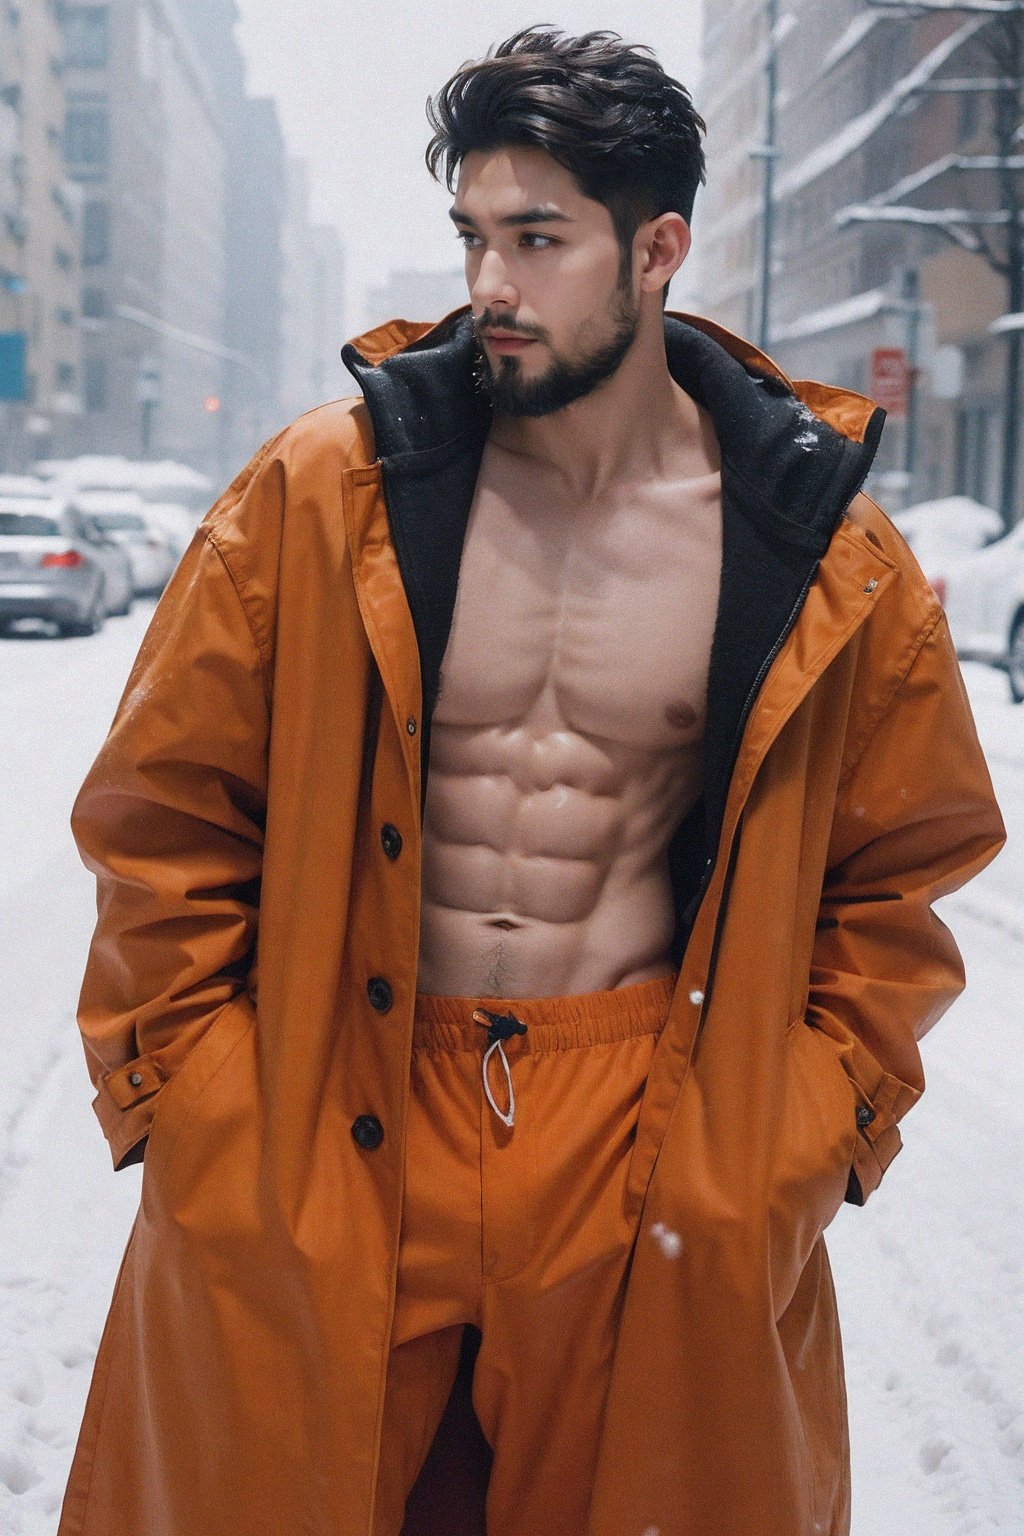 silver_hair,handsome male,beard,(oversized orange coat:1.1),abs,winter,snow,